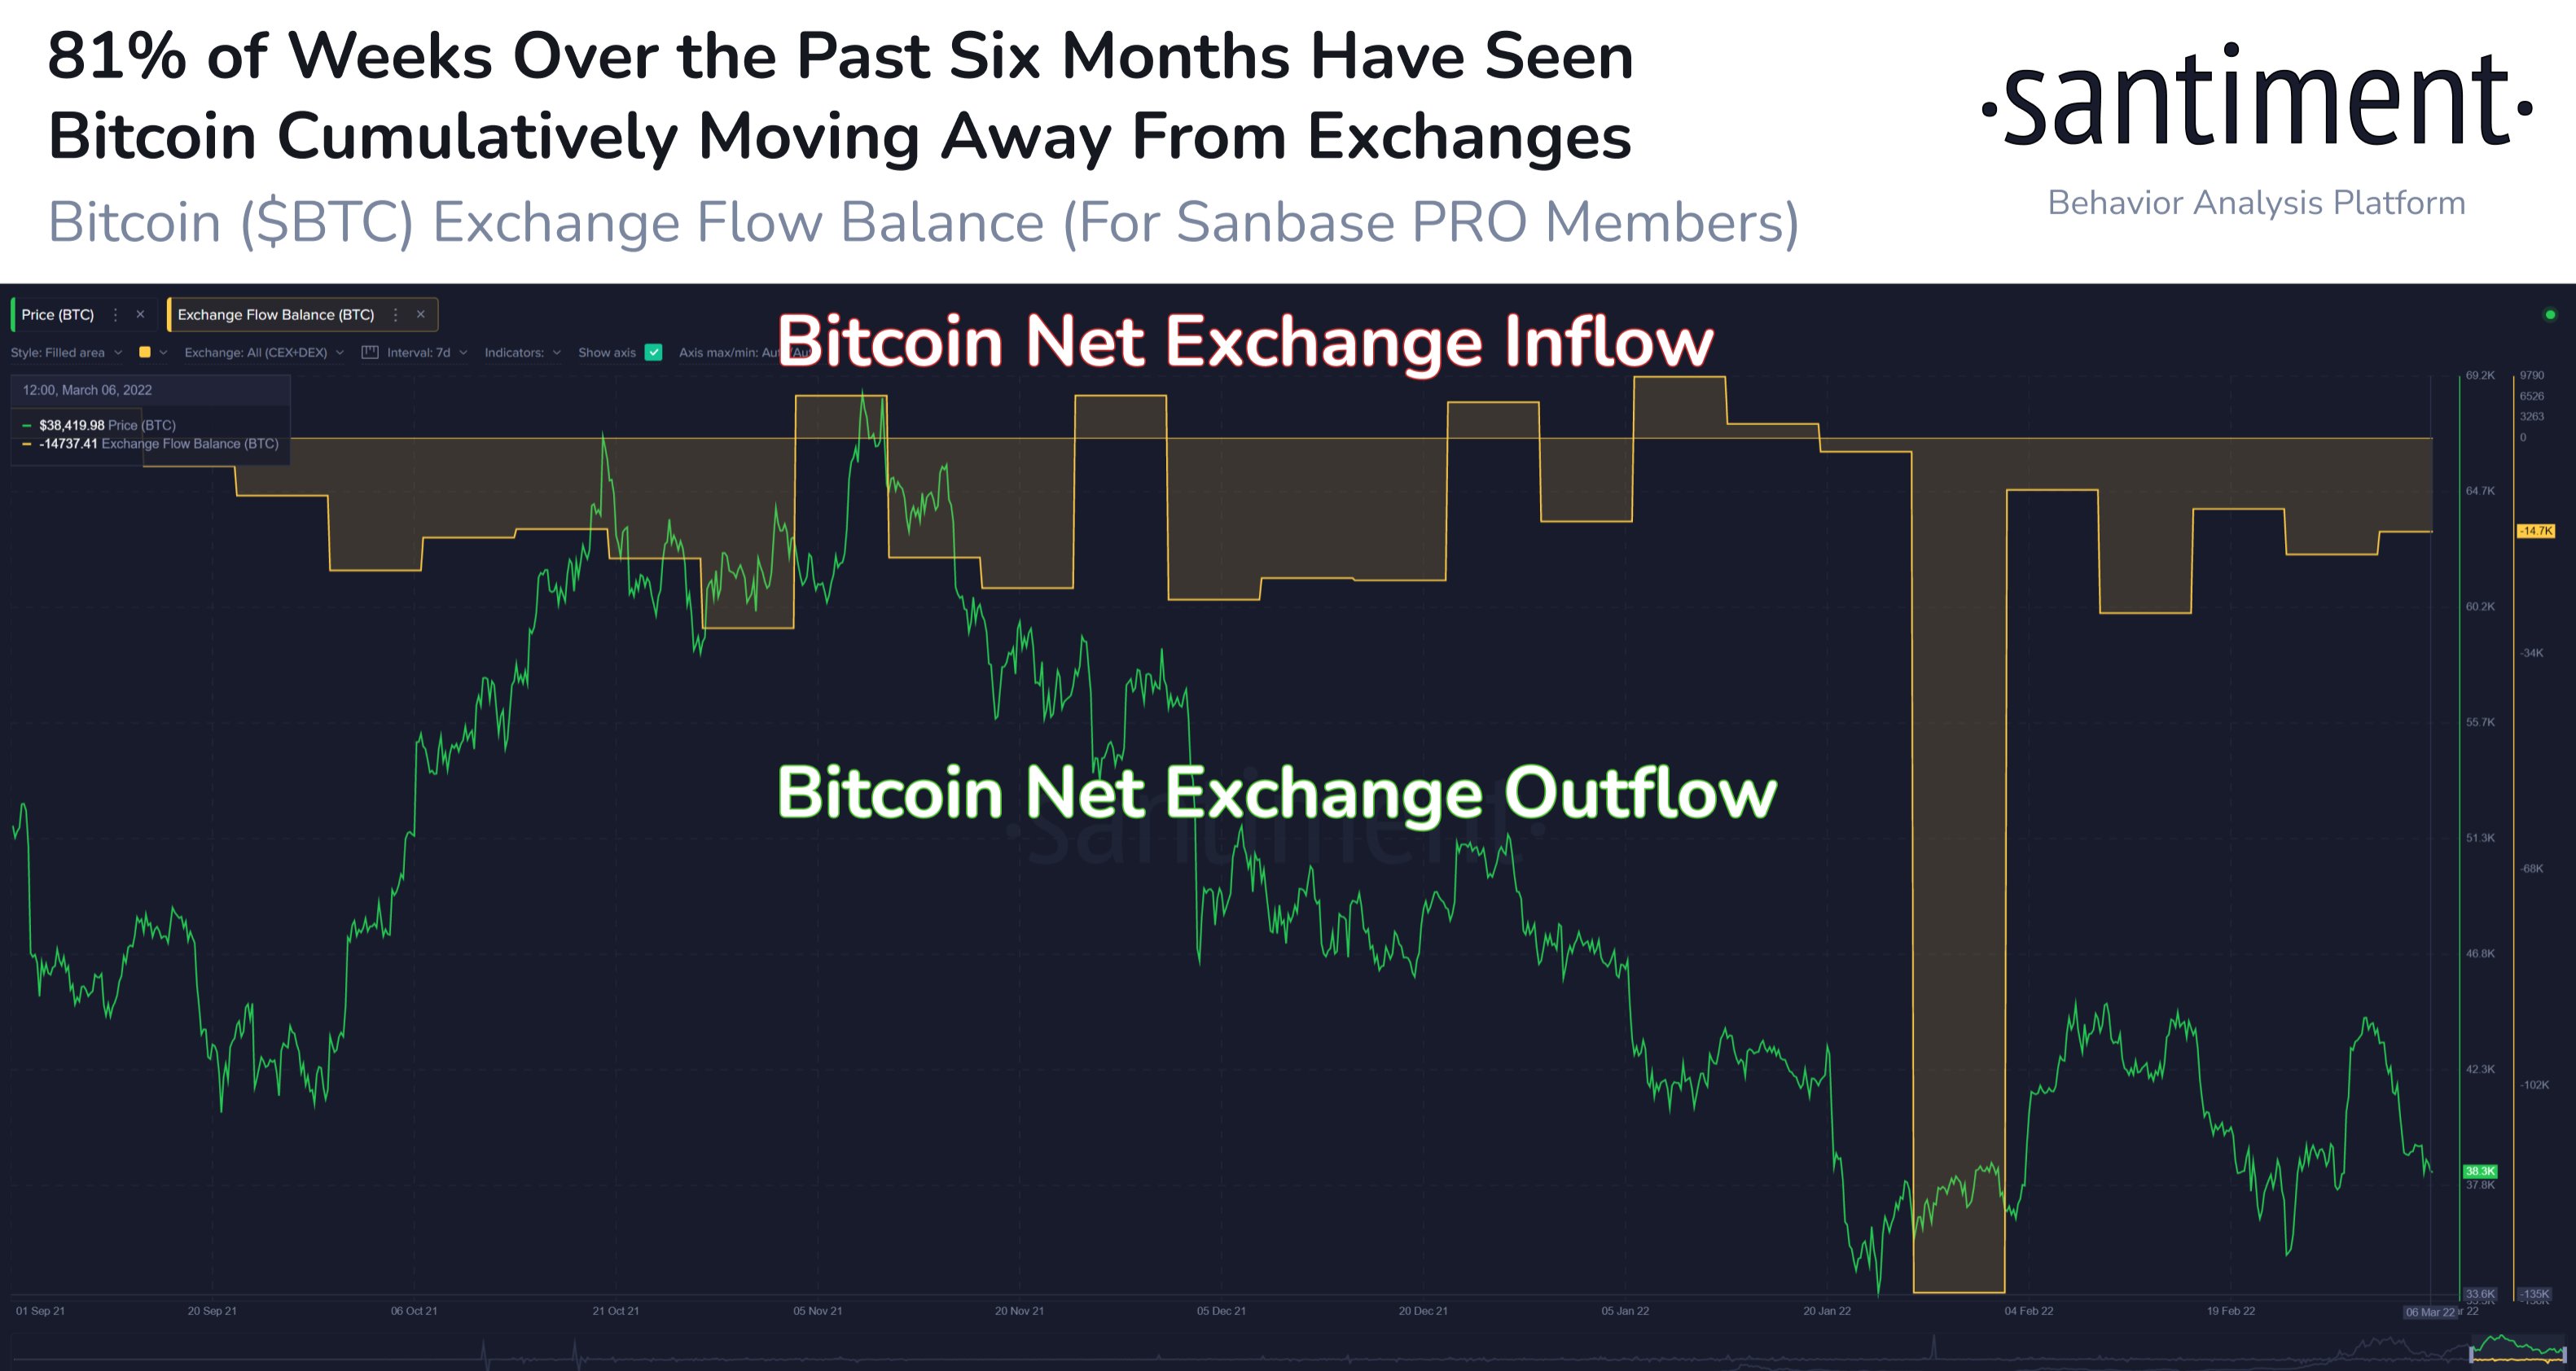 Bitcoin Net Exchange Outflow